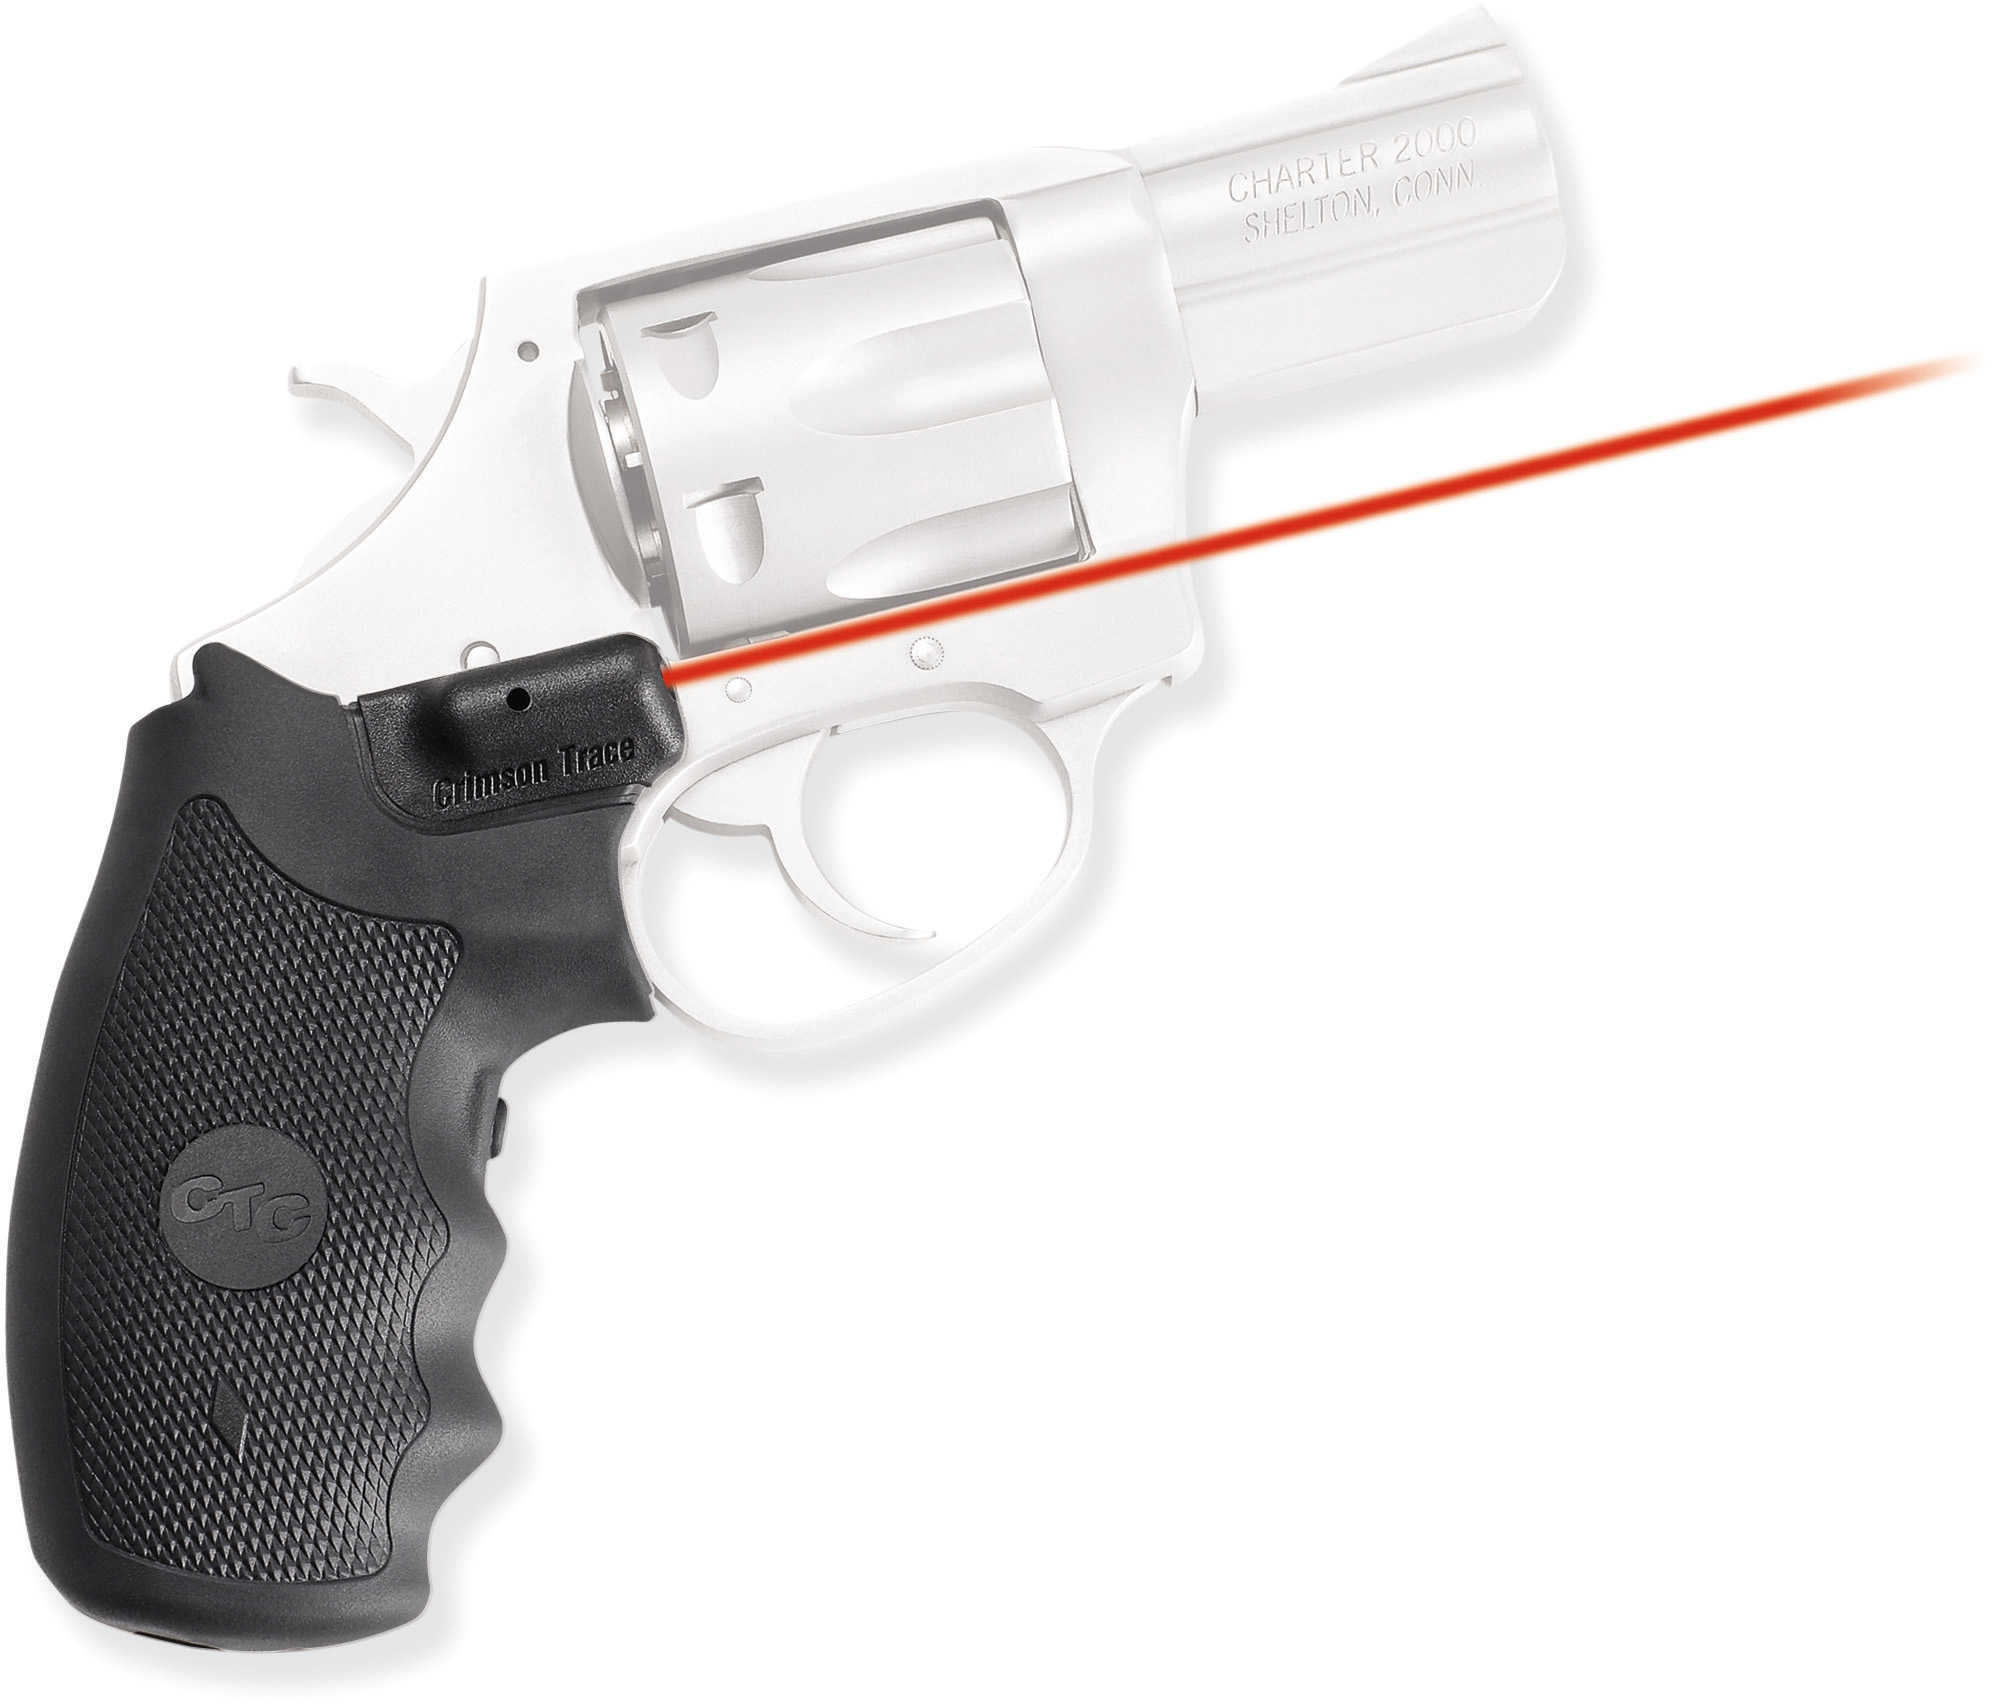 Crimson Trace Corporation Defender LaserGrip Fits Charter Arms Revolvers